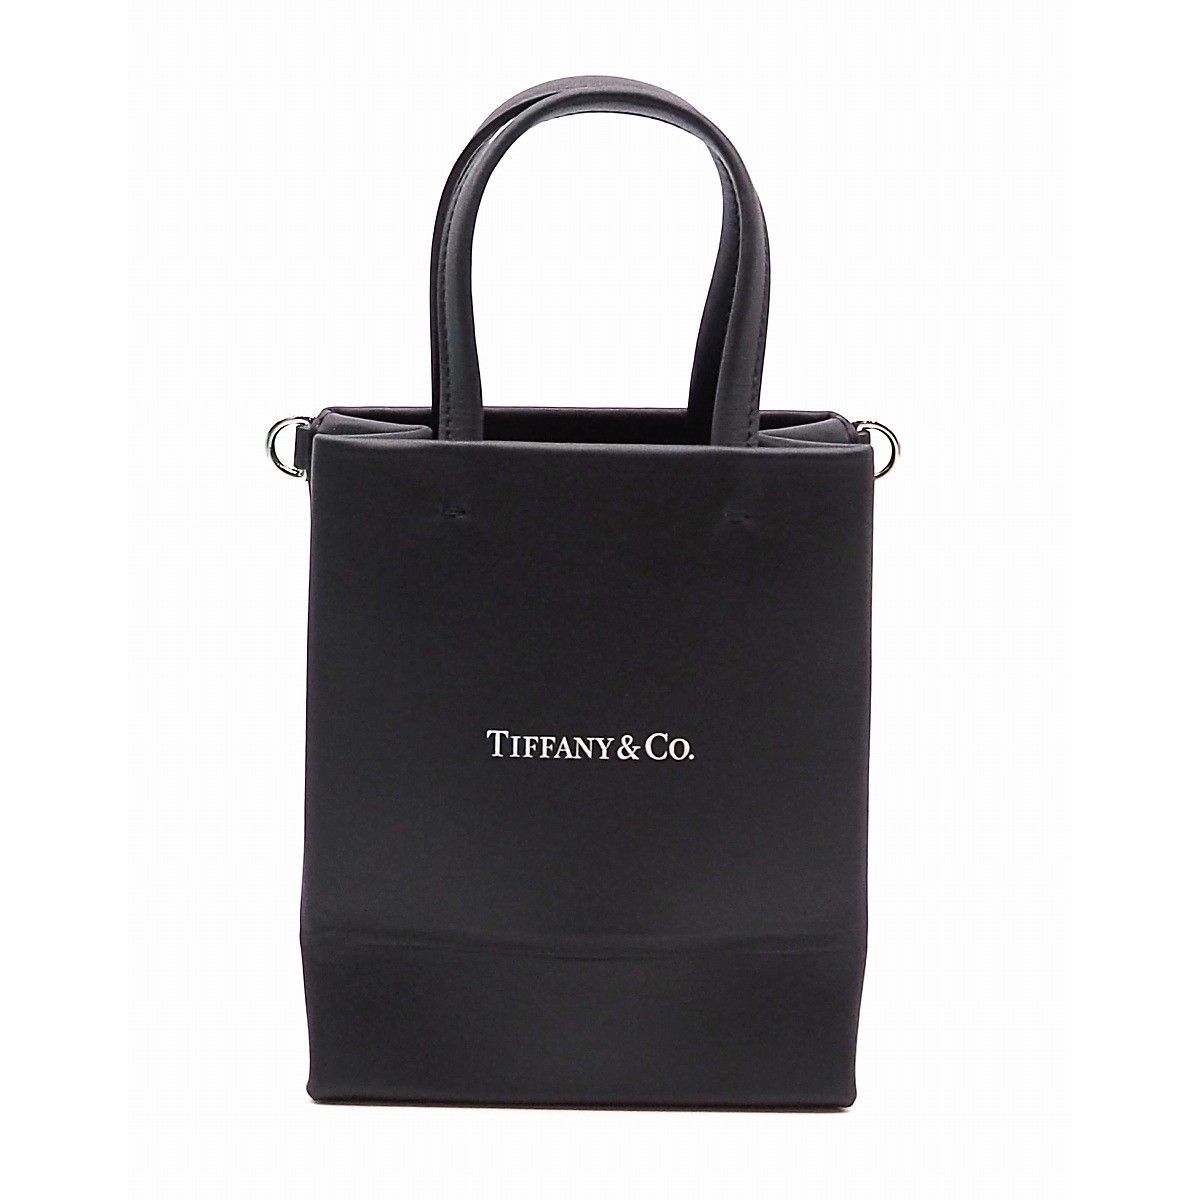 TIFFANY&Co. / ティファニー ■ クロコダイル ショルダーバッグ ブラック バッグ / バック / BAG / 鞄 / カバン ブランド  [0990007968]